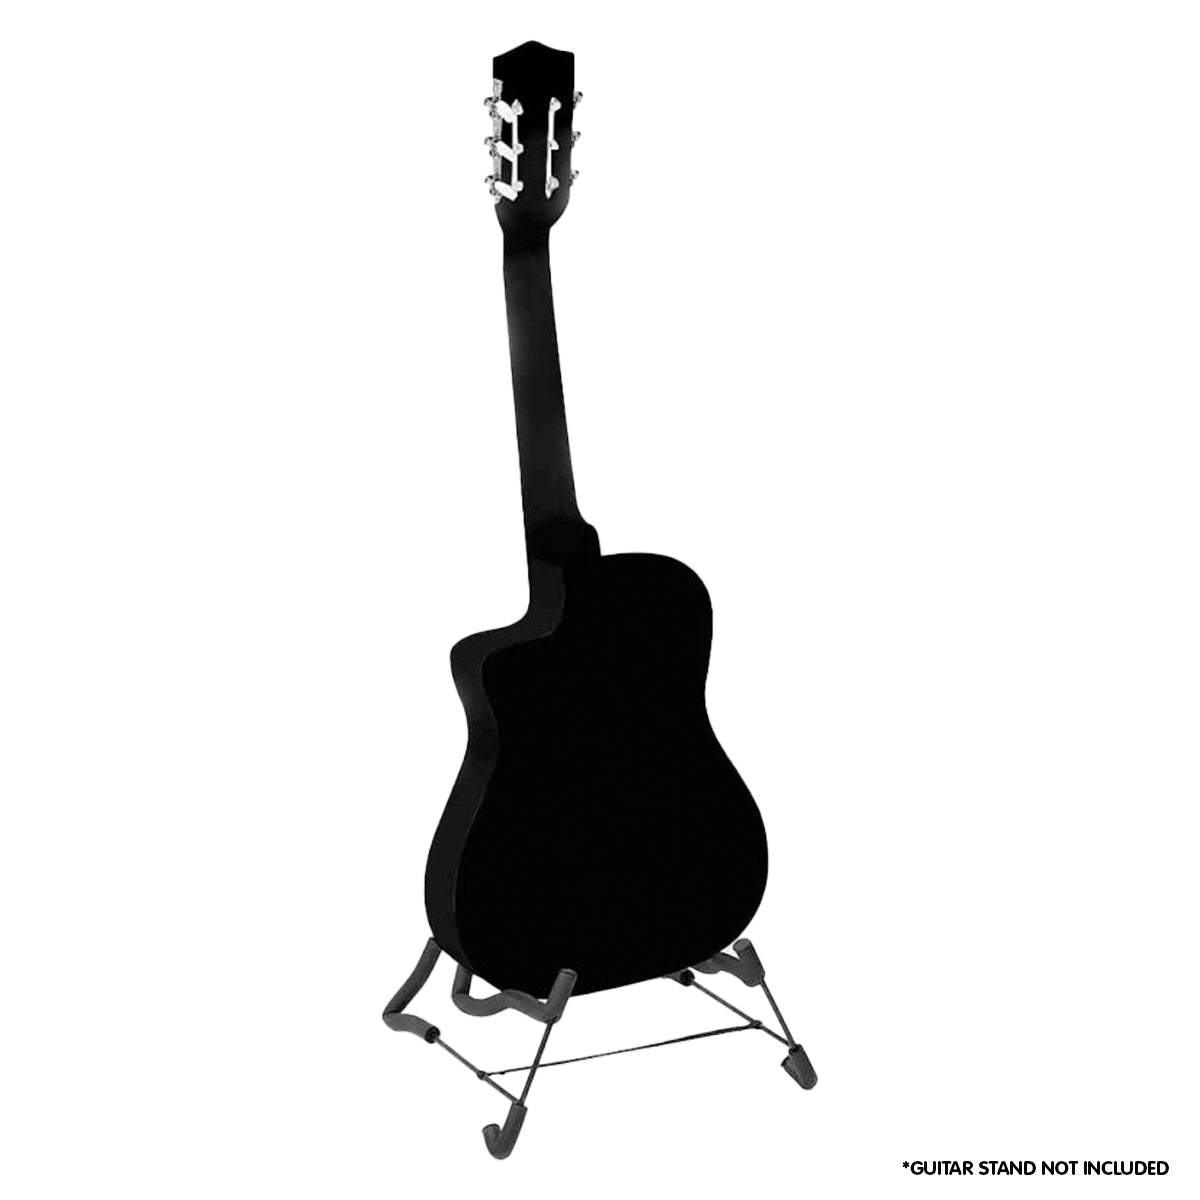 34" Cutaway Childrens Acoustic Guitar, High Quality Finish, Karrera